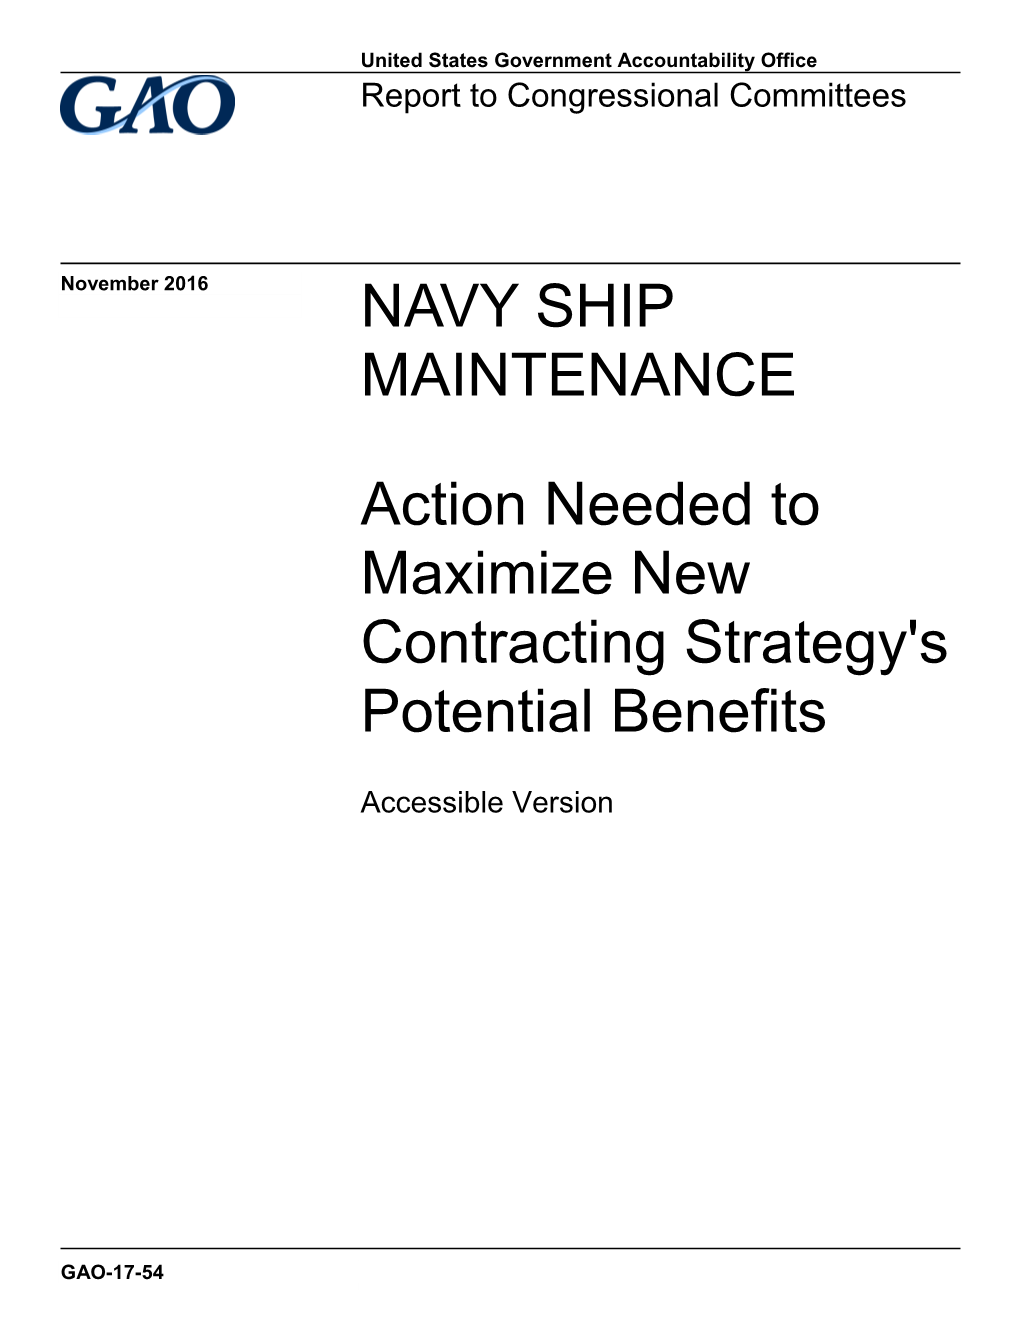 GAO-17-54, Accessible Version, NAVY SHIP MAINTENANCE: Action